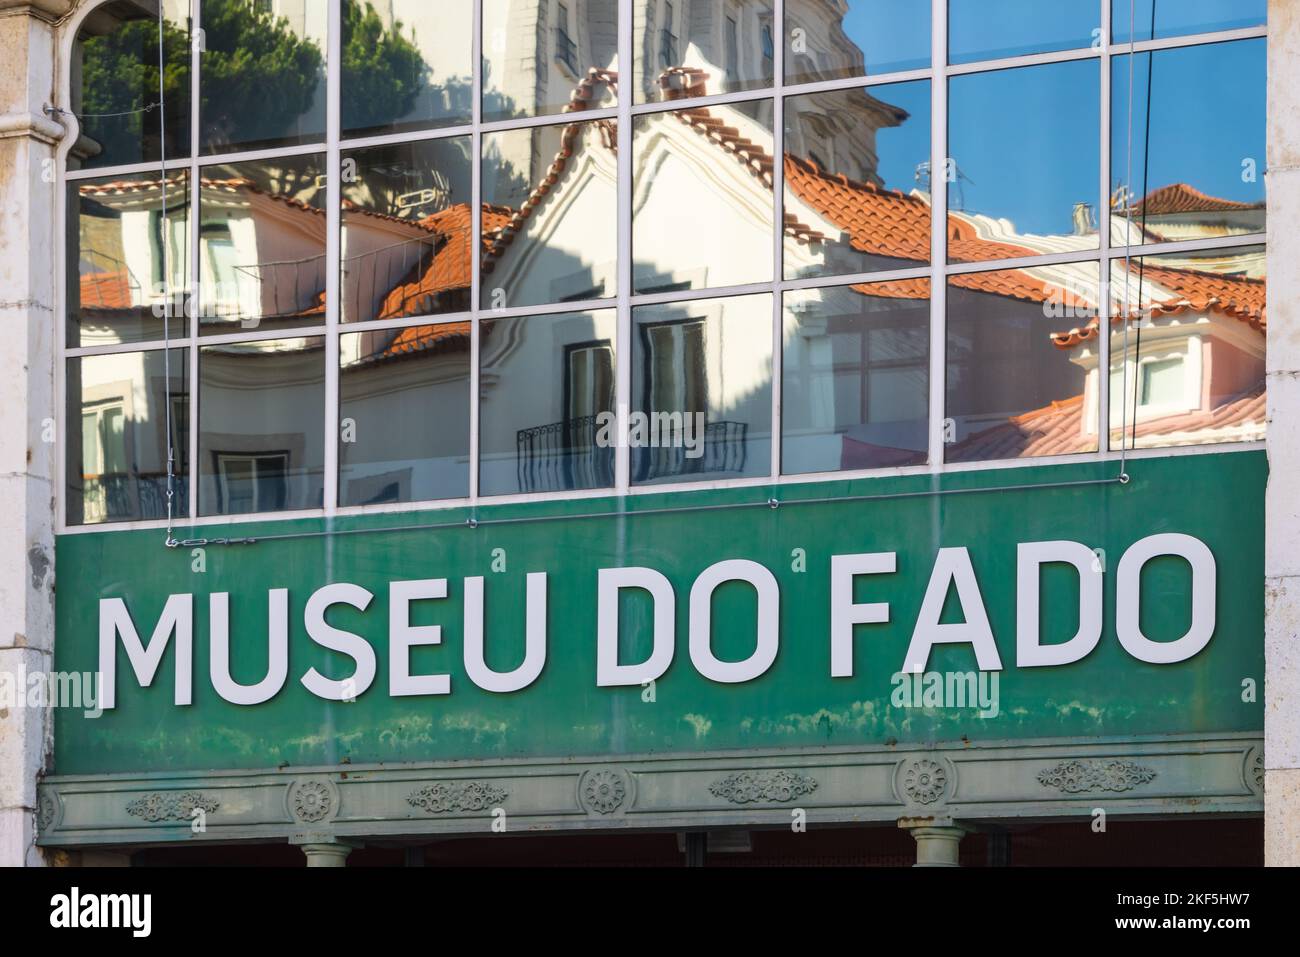 Museu do Fado, Fado Museum in the Alfama neighborhood, Lisbon, capital of Portugal. Museum of Portuguese music style Fado. Stock Photo